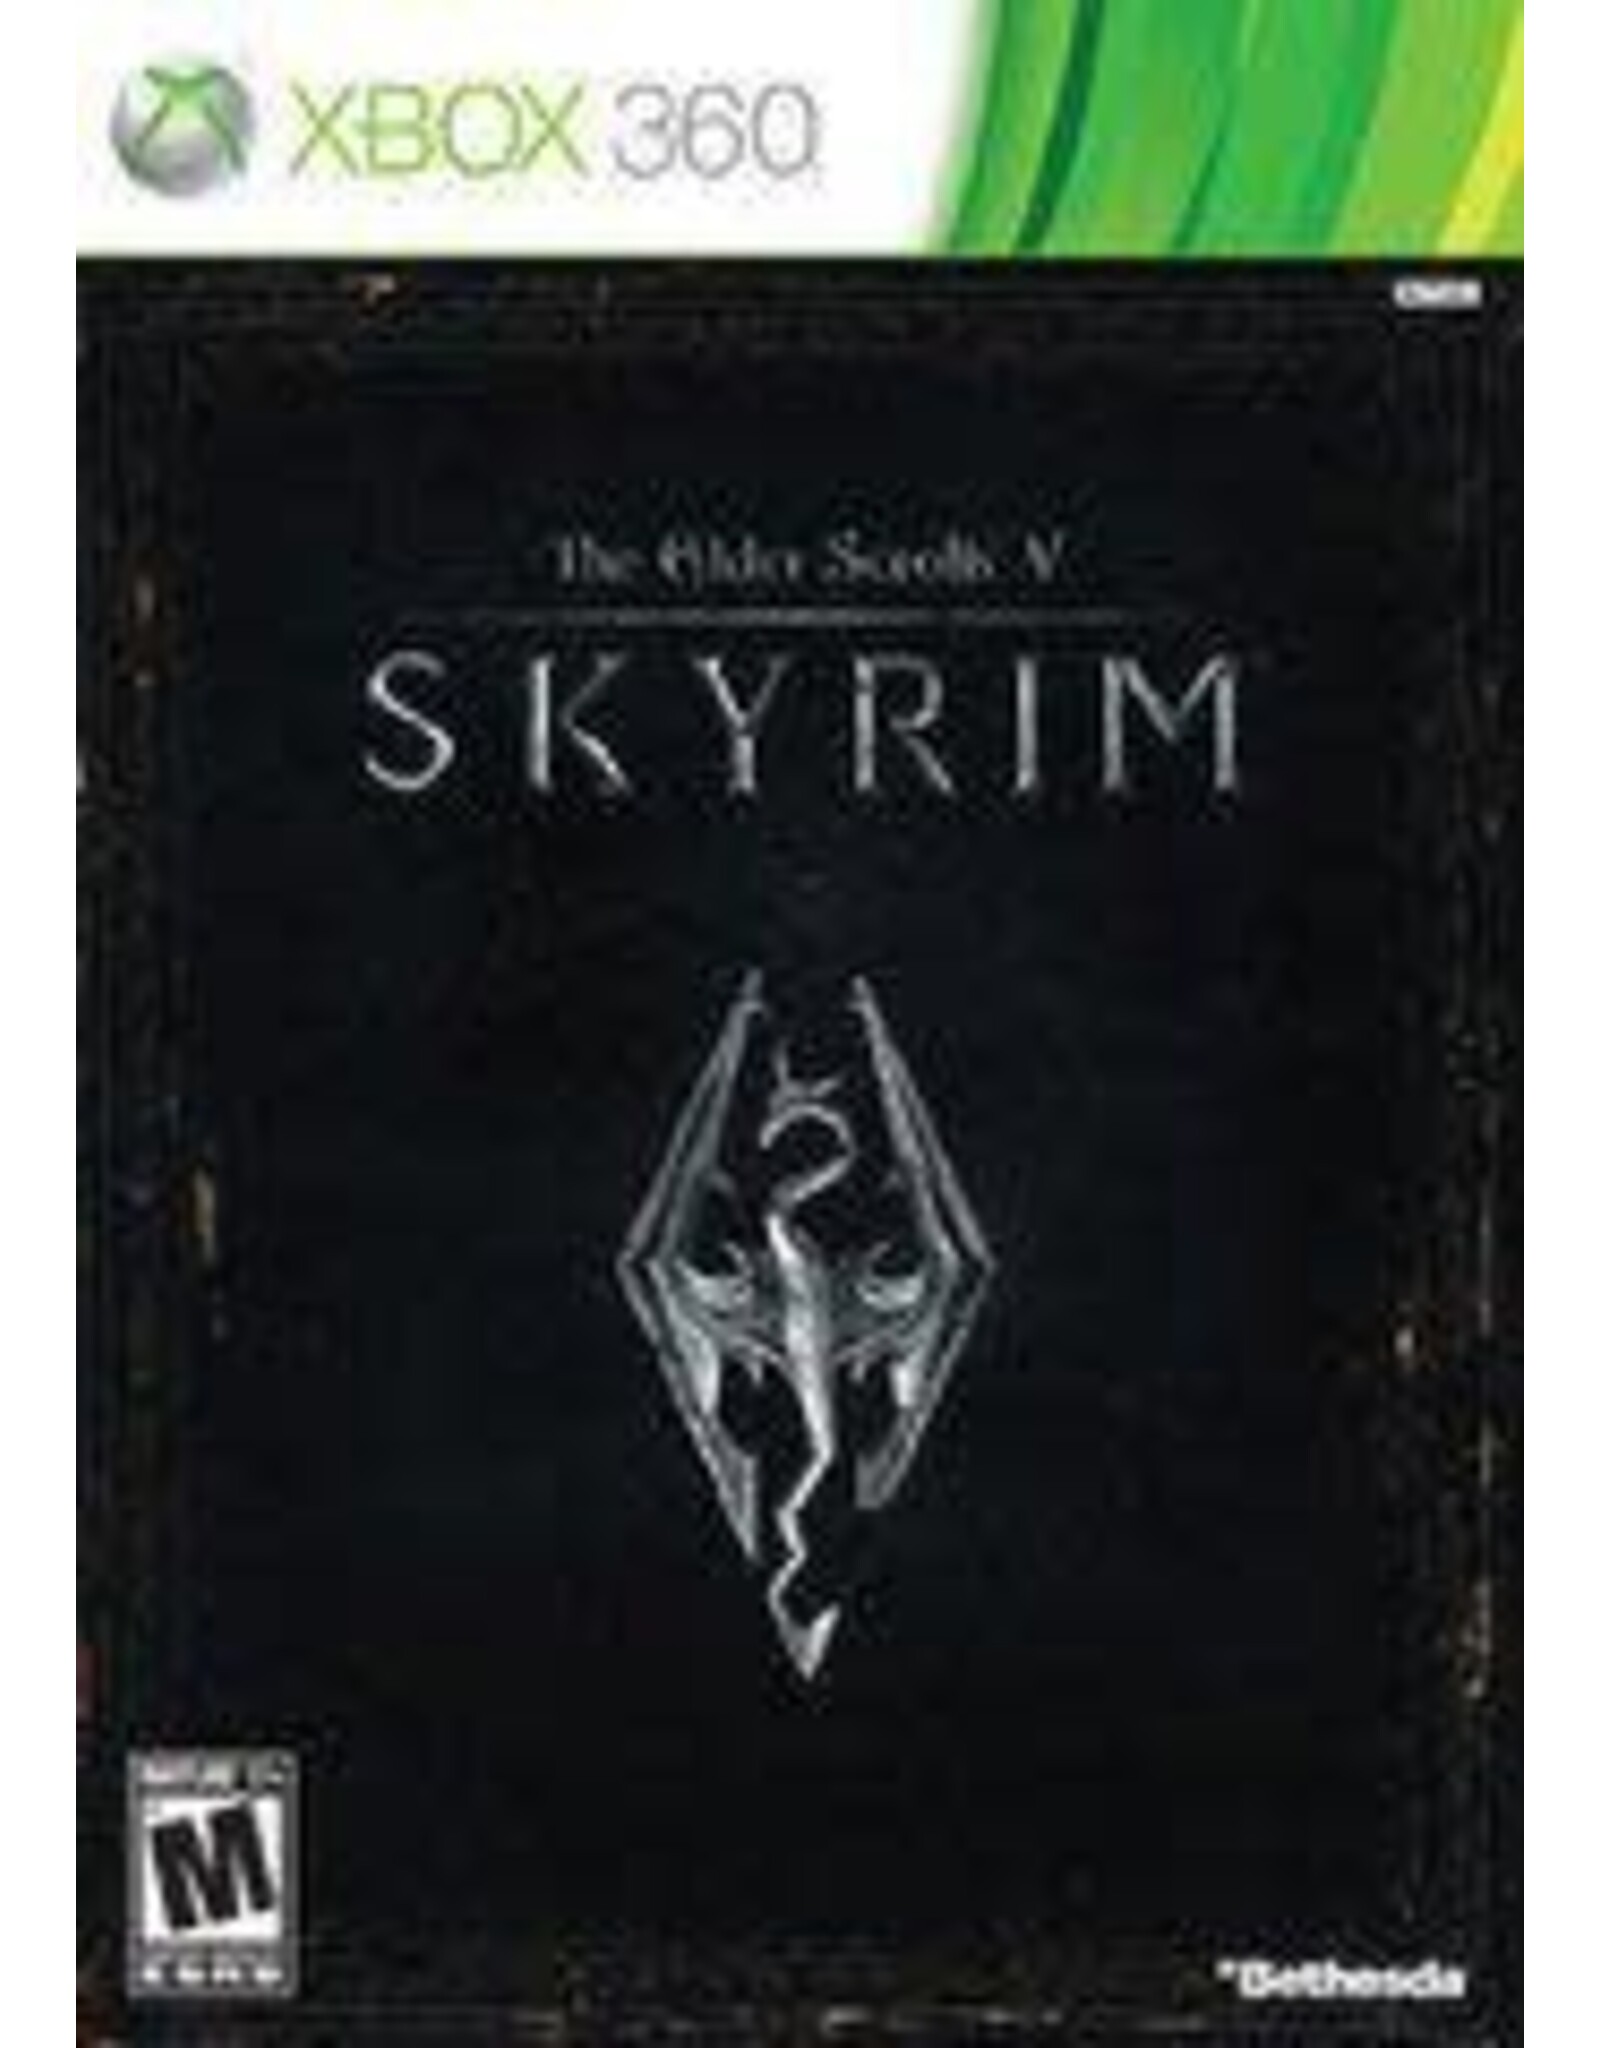 Capcom Used Game - XBOX 360 - The Elder Scrolls V: Skyrim [CIB]